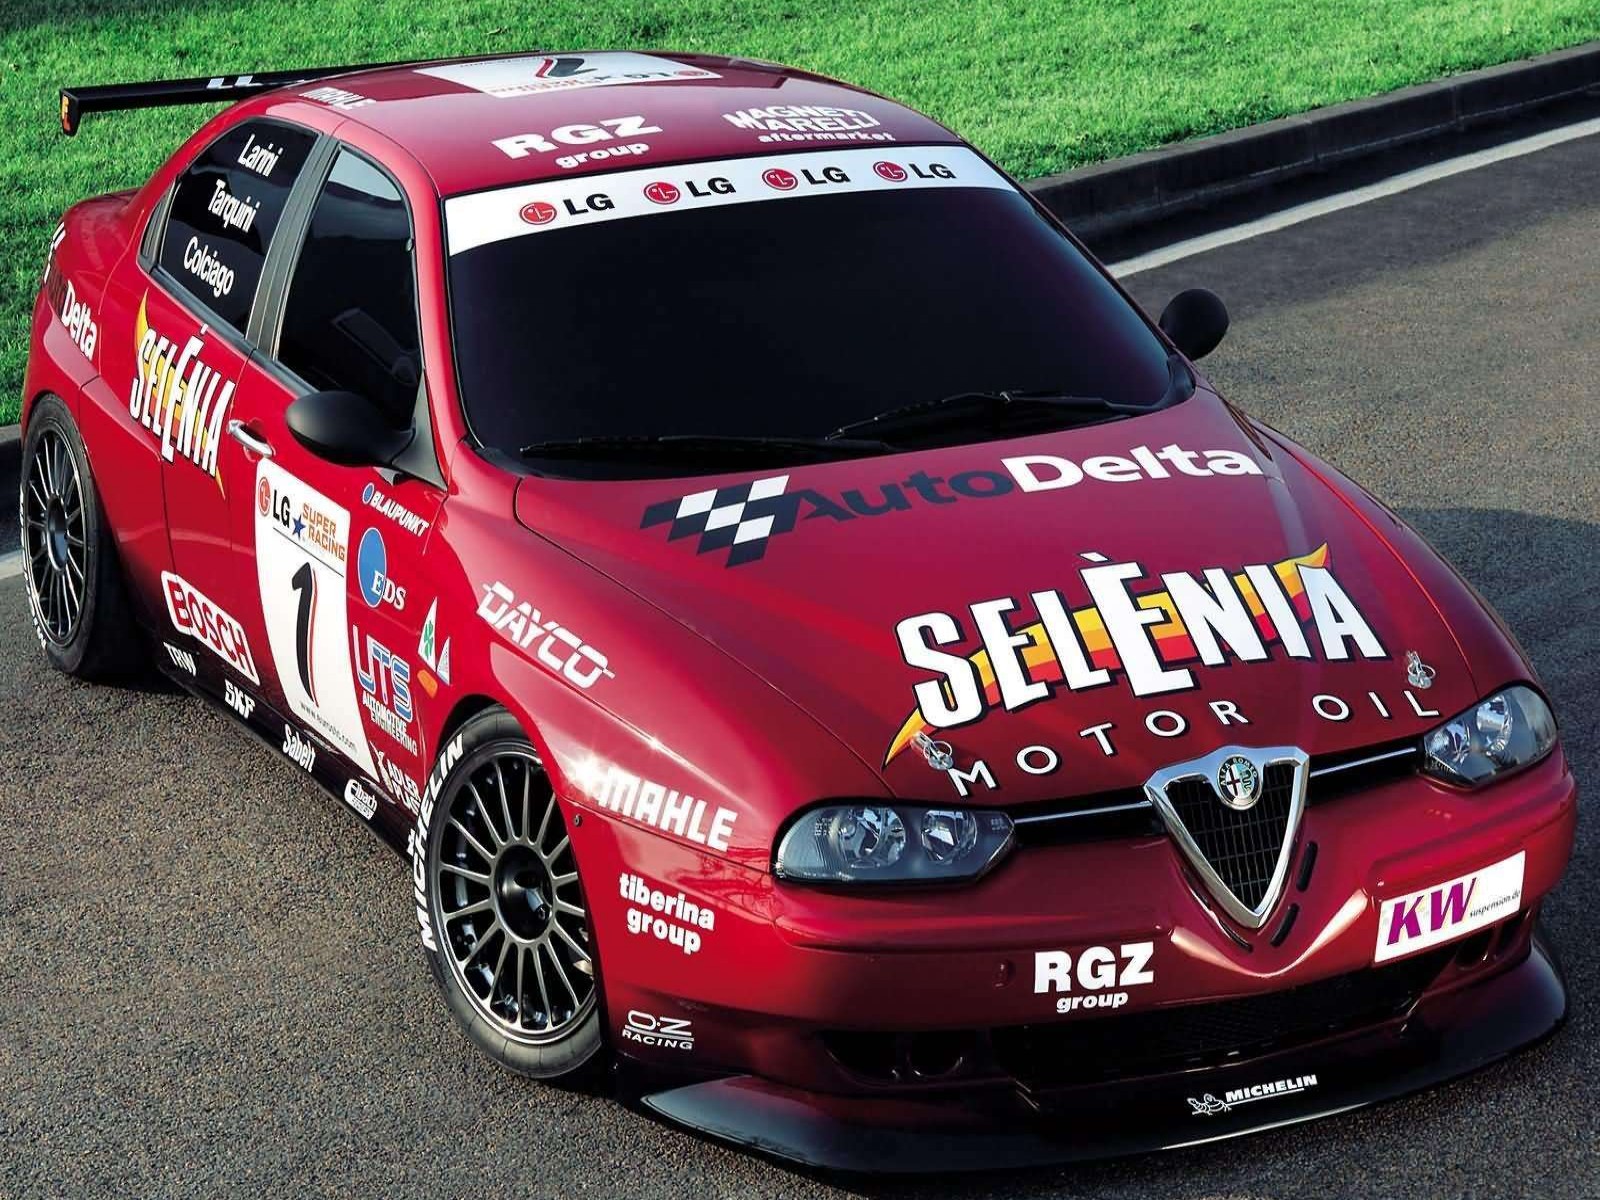 https://blogger.googleusercontent.com/img/b/R29vZ2xl/AVvXsEjJixP9FpRi2r9W3zraGwX6xYulHrI4IZigm8bgQylFCwk61CWNRQxBECjfVqaKa7EqbUiU4zgaPmqRoxgUhKPzUiJgAlLLKyRTcfvHjmXyc5crIXVddusLXtgw67V1ft8JWrhR5jSZtbE/s1600/Alfa+Romeo+156+GTA+Autodelta+2003+01.jpg